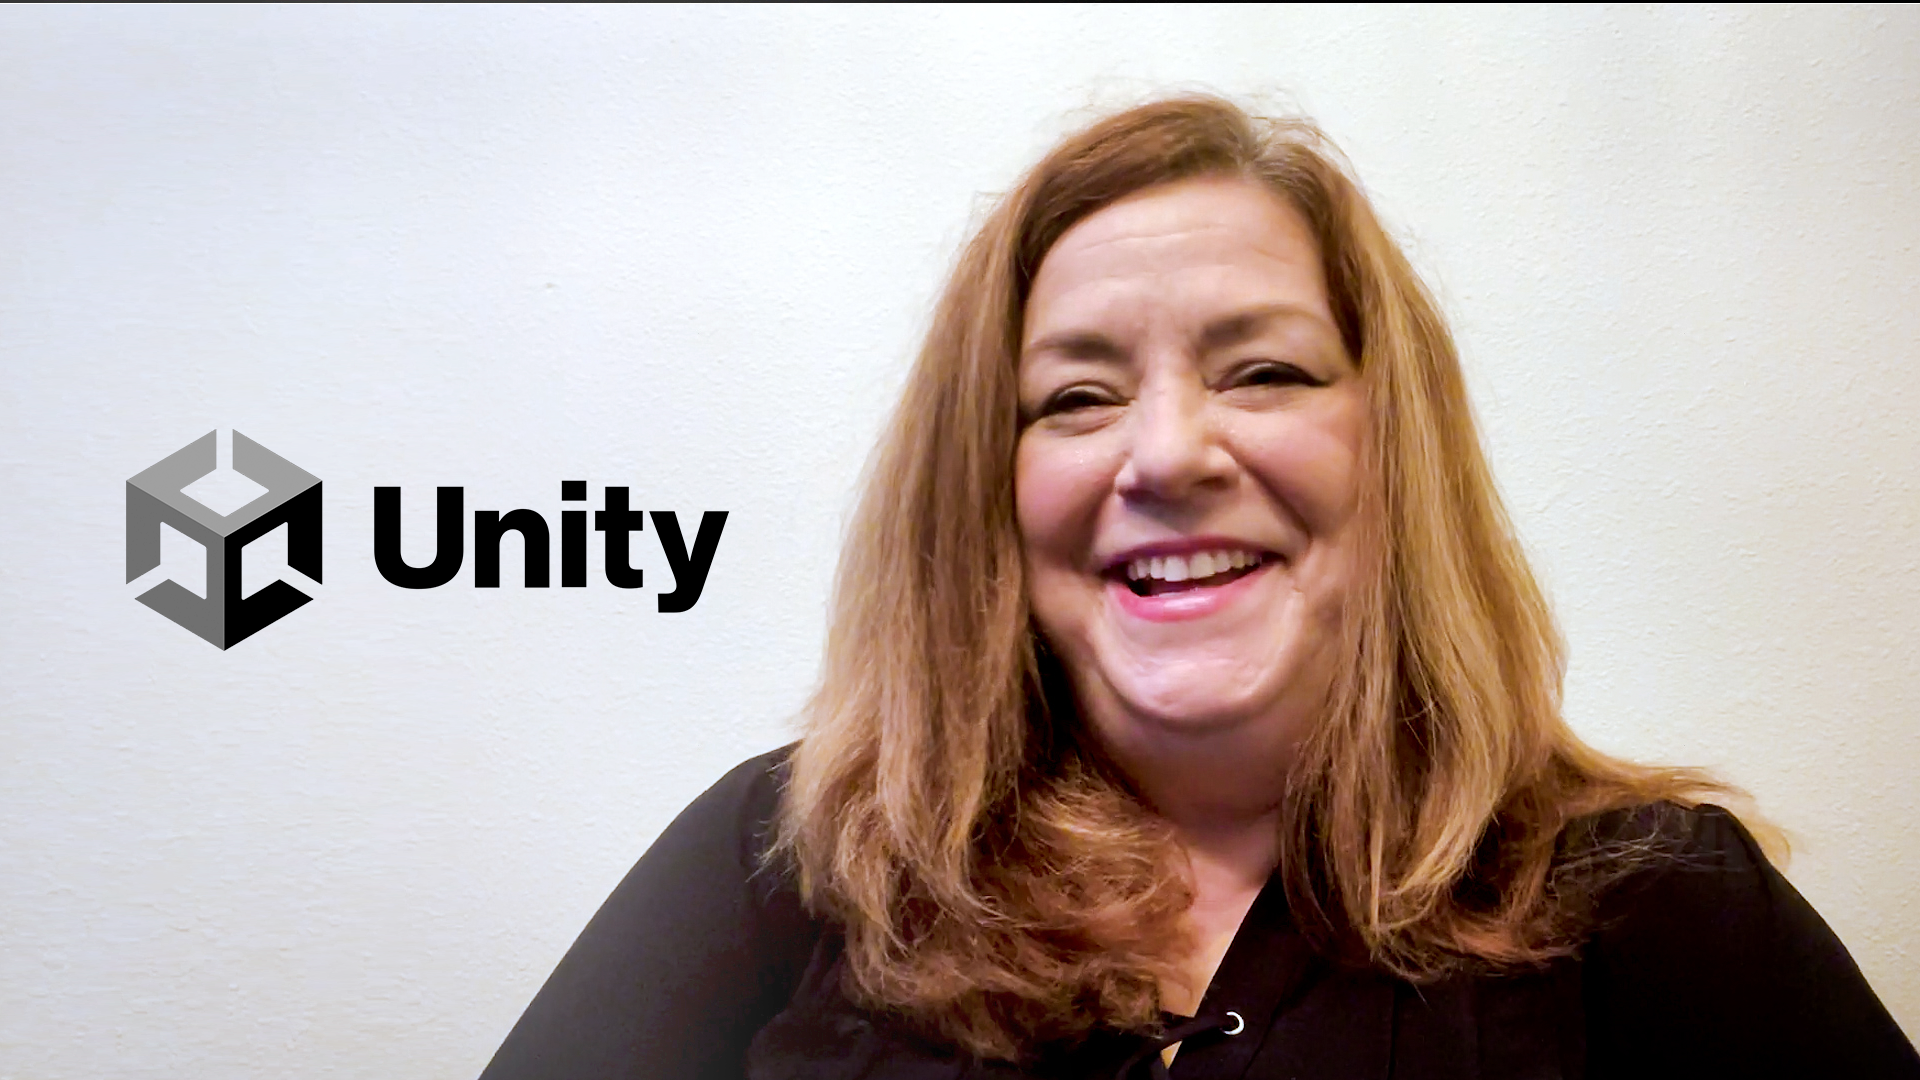 Unity Client Testimonial Video